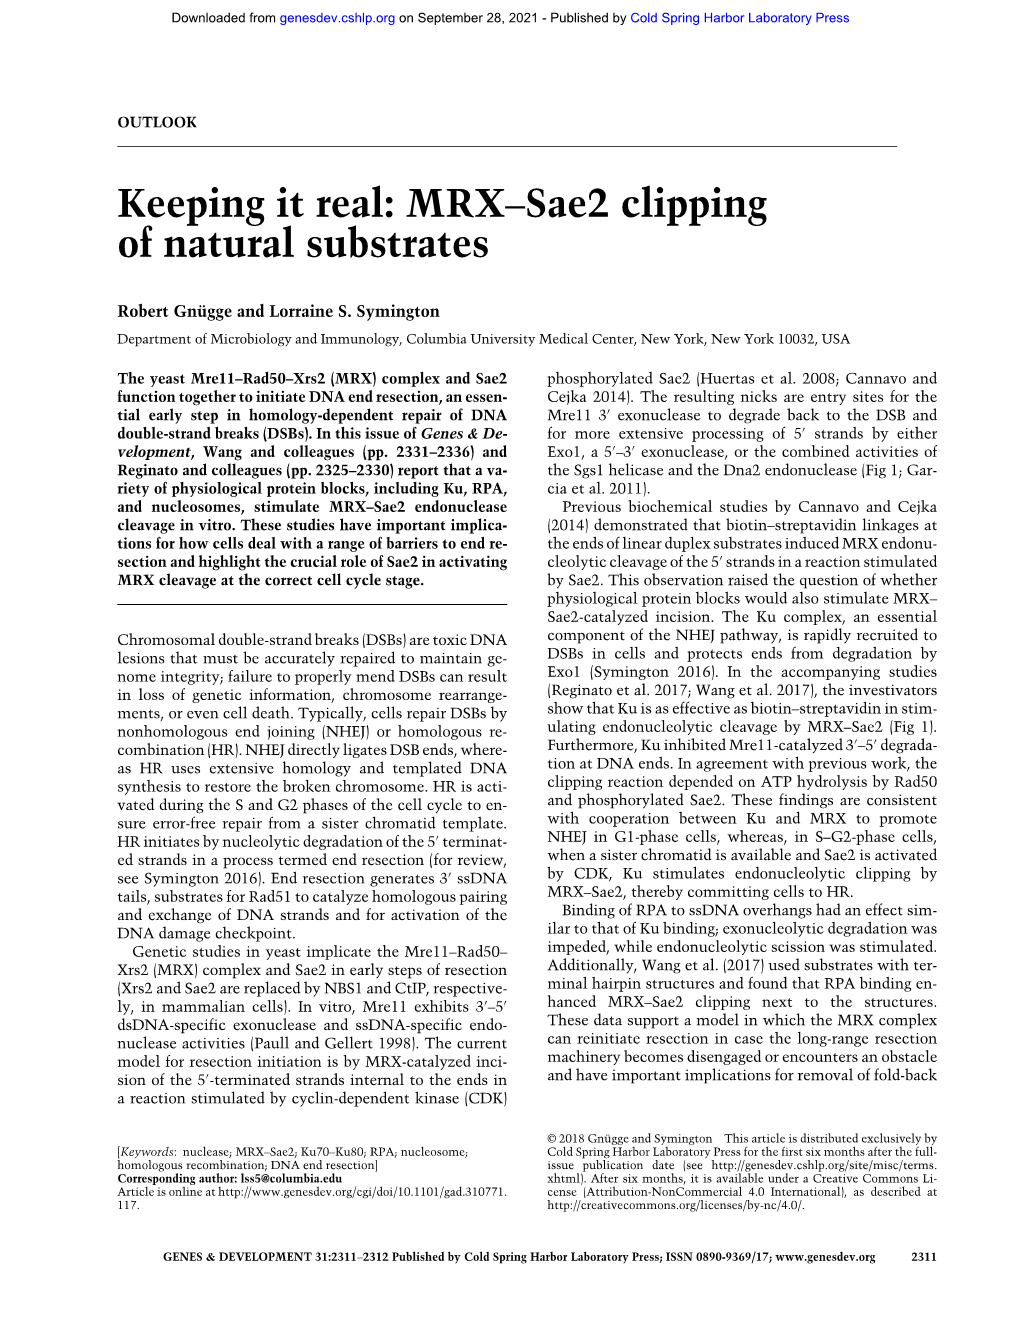 MRX–Sae2 Clipping of Natural Substrates